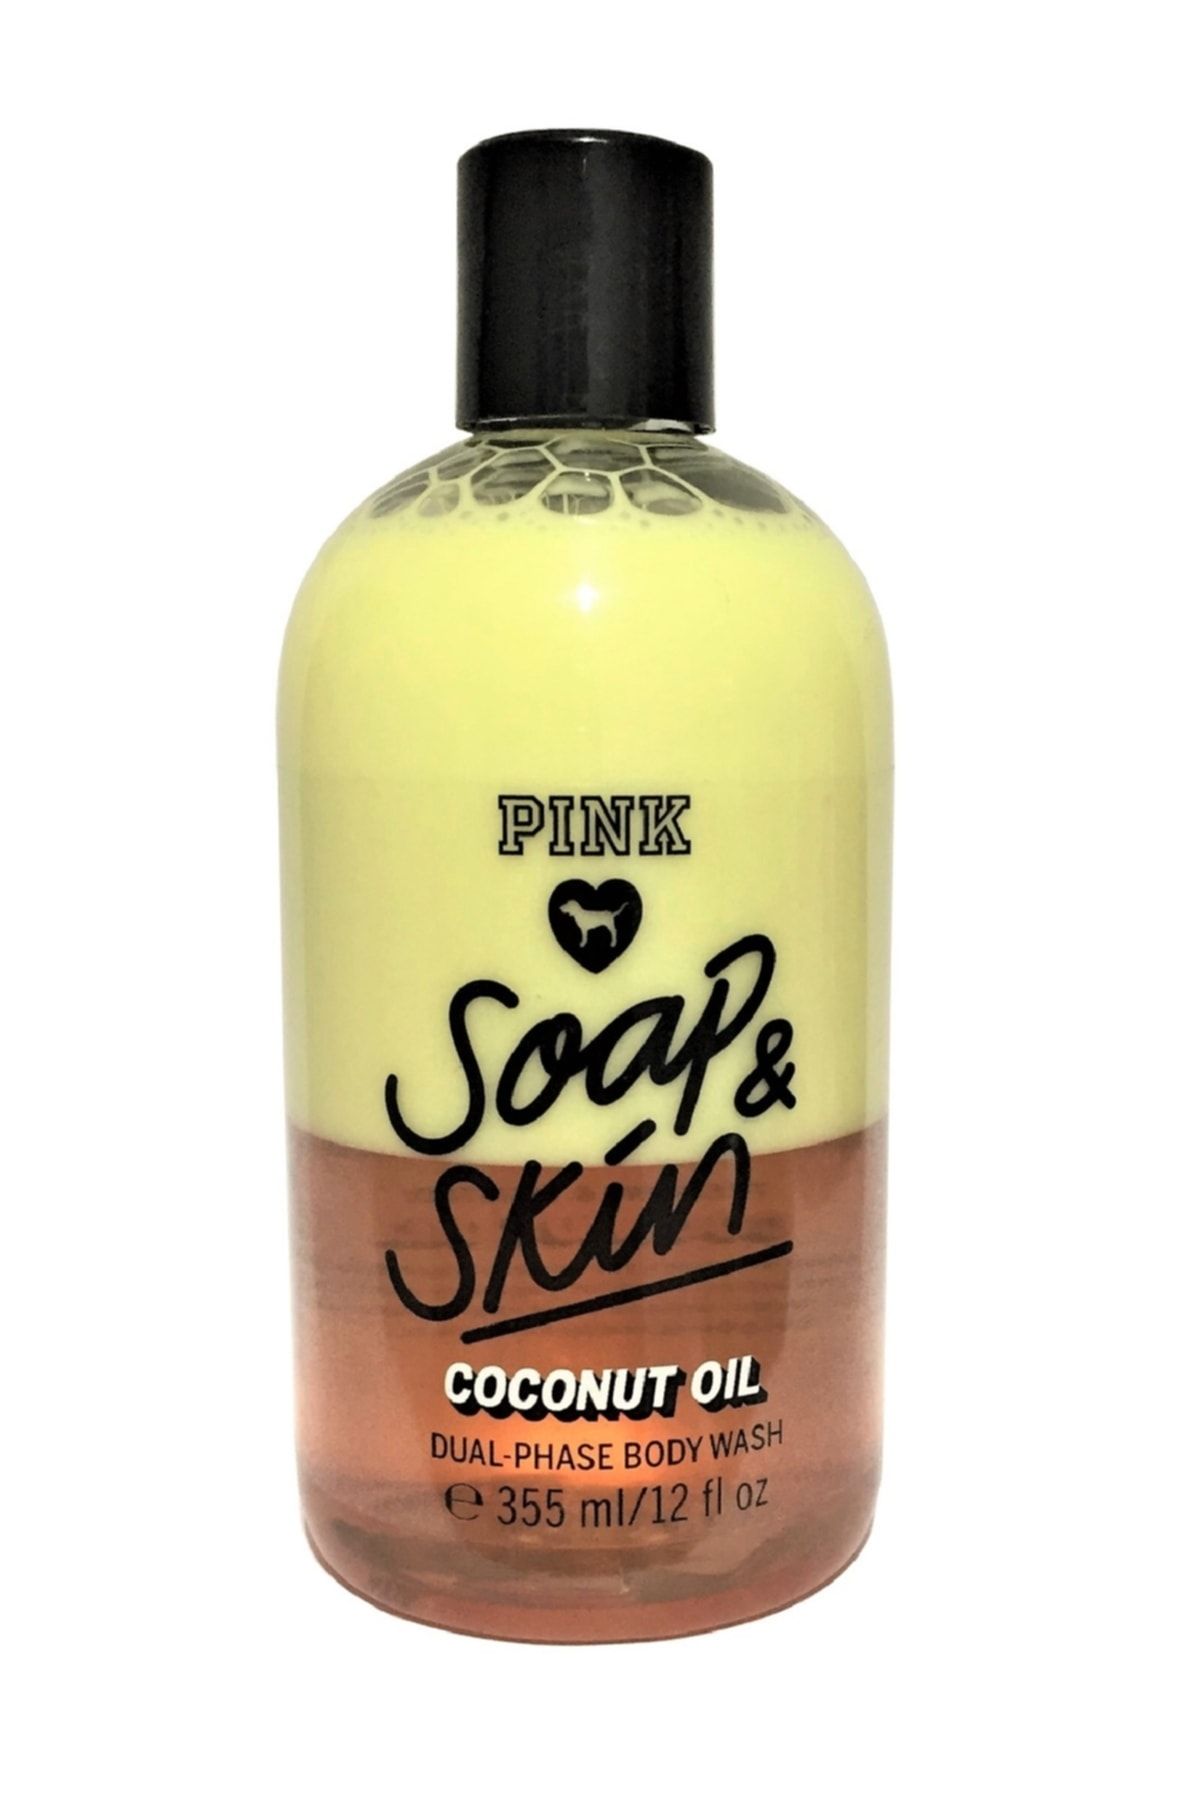 Victoria's Secret Pink Soap & Skin Coconut Oil Çift Fazlı Duş Jeli 355ml